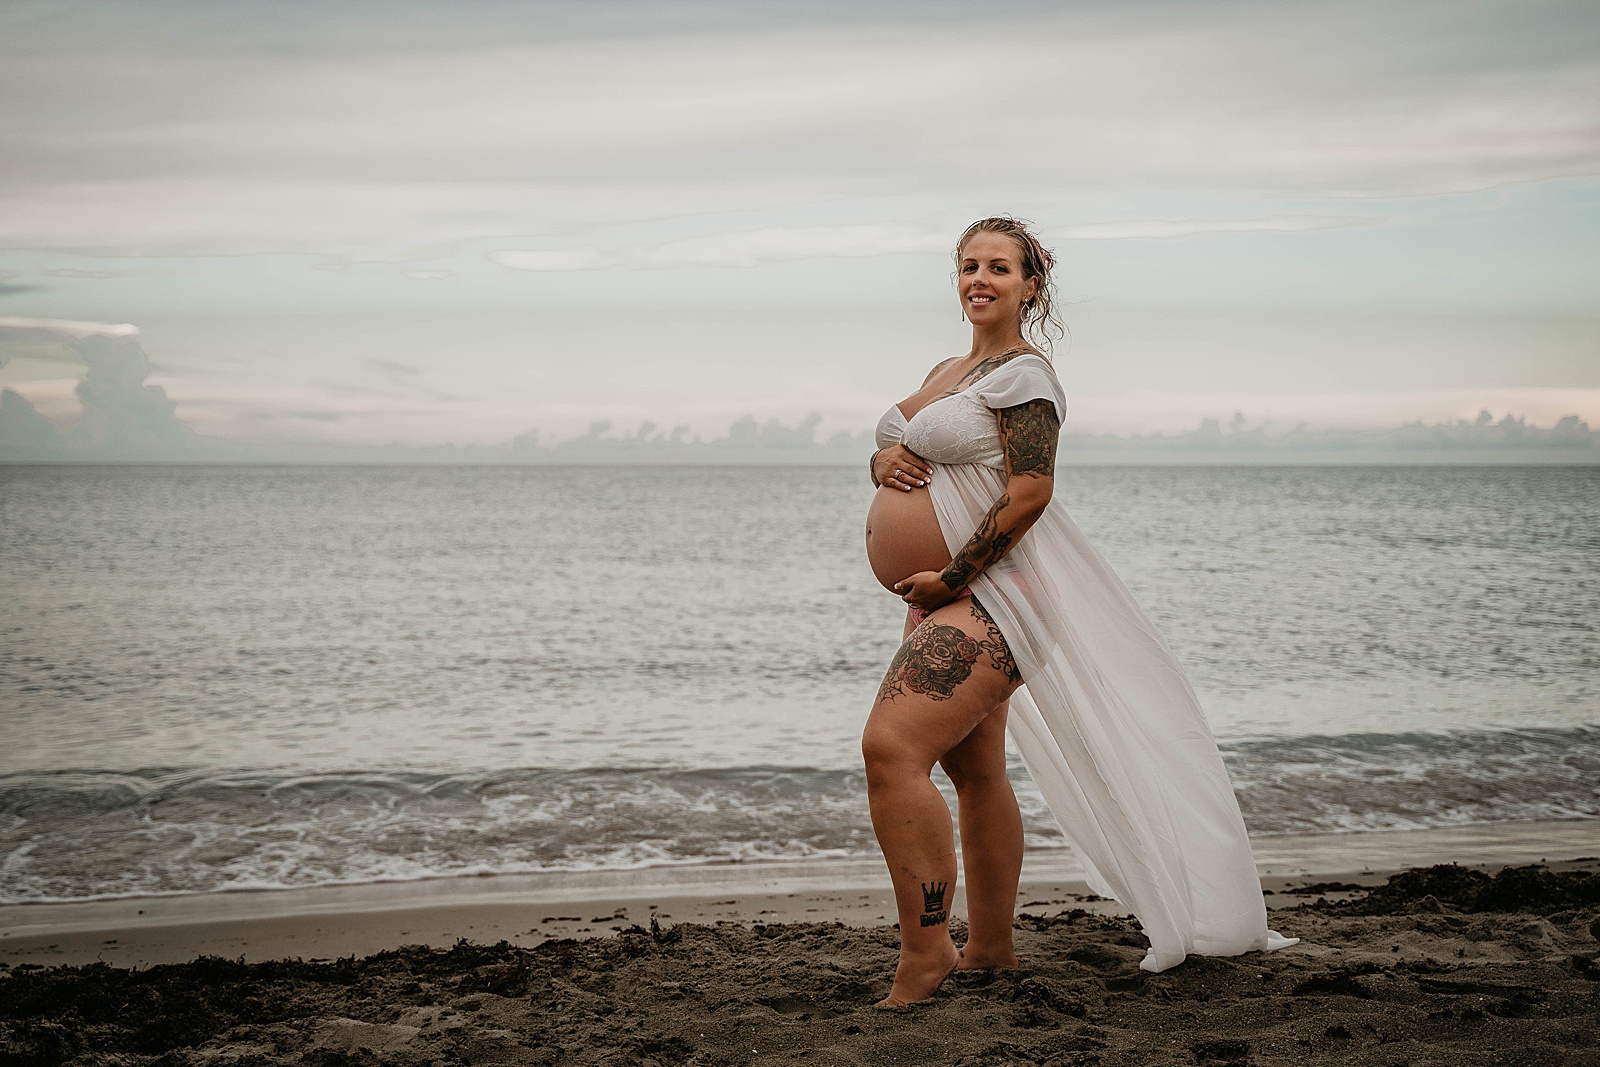 Palm Beach Maternity Photos by South Florida Lifestyle Photographer, Krystal Capone Photography